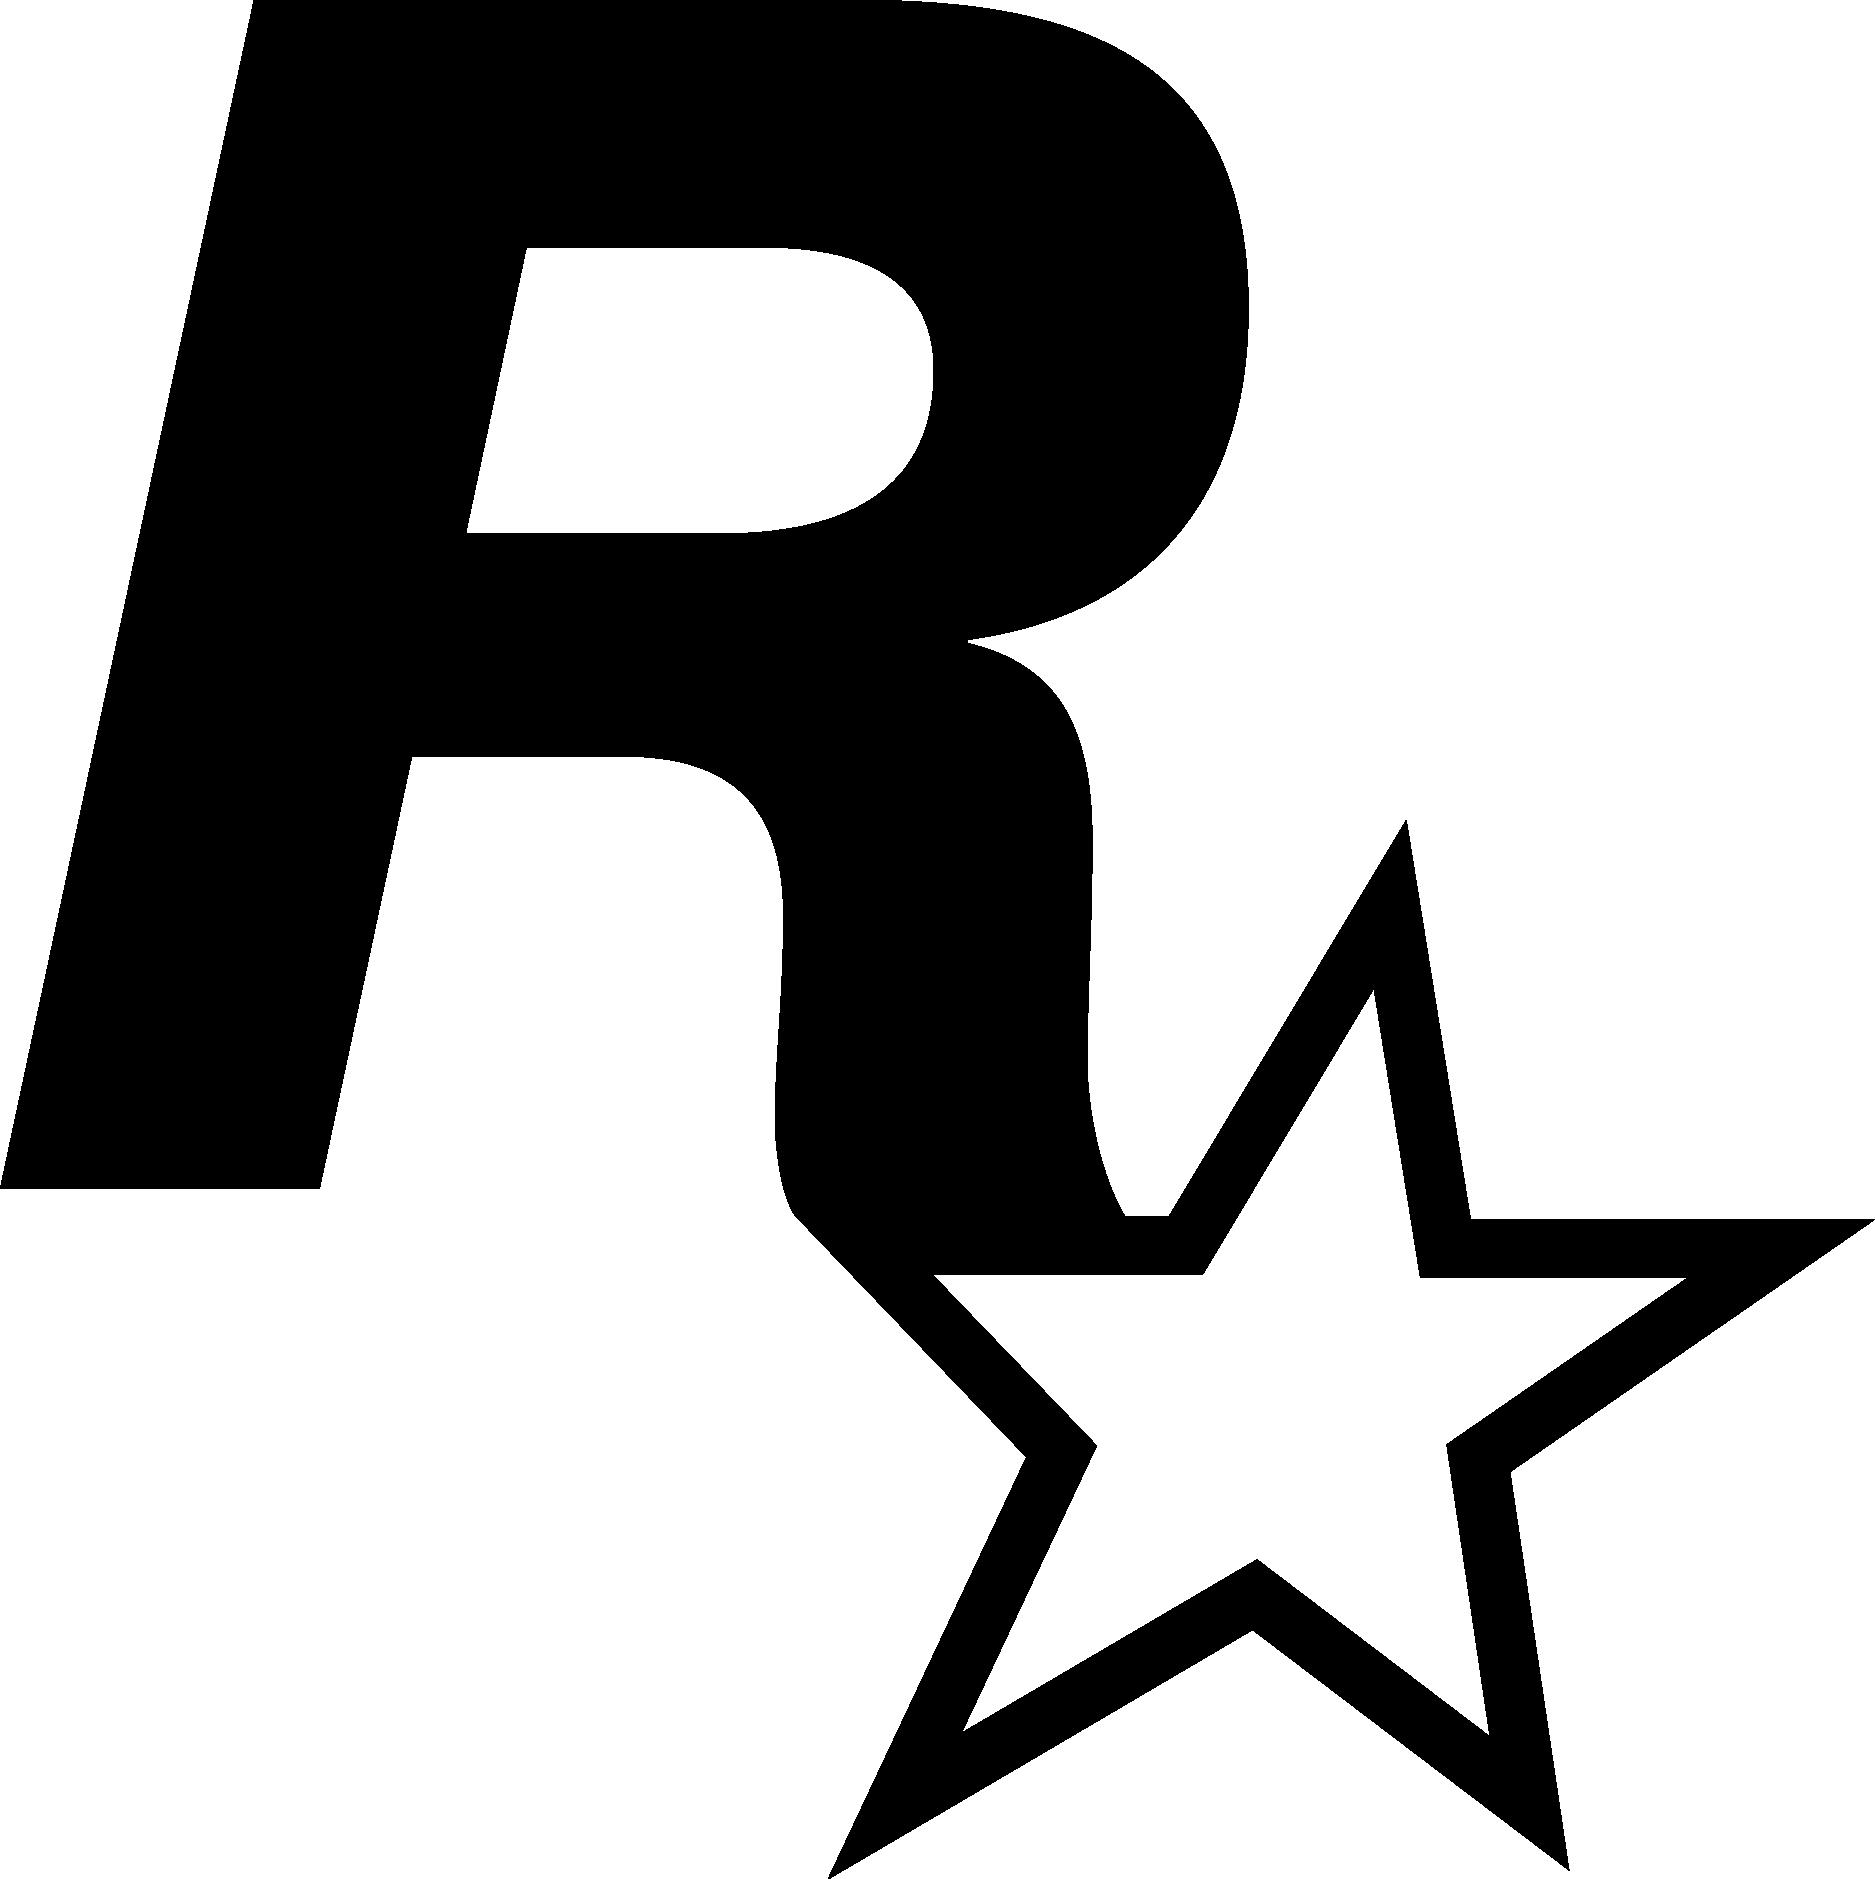 Rockstar Energy Logo PNG Vector (EPS) Free Download